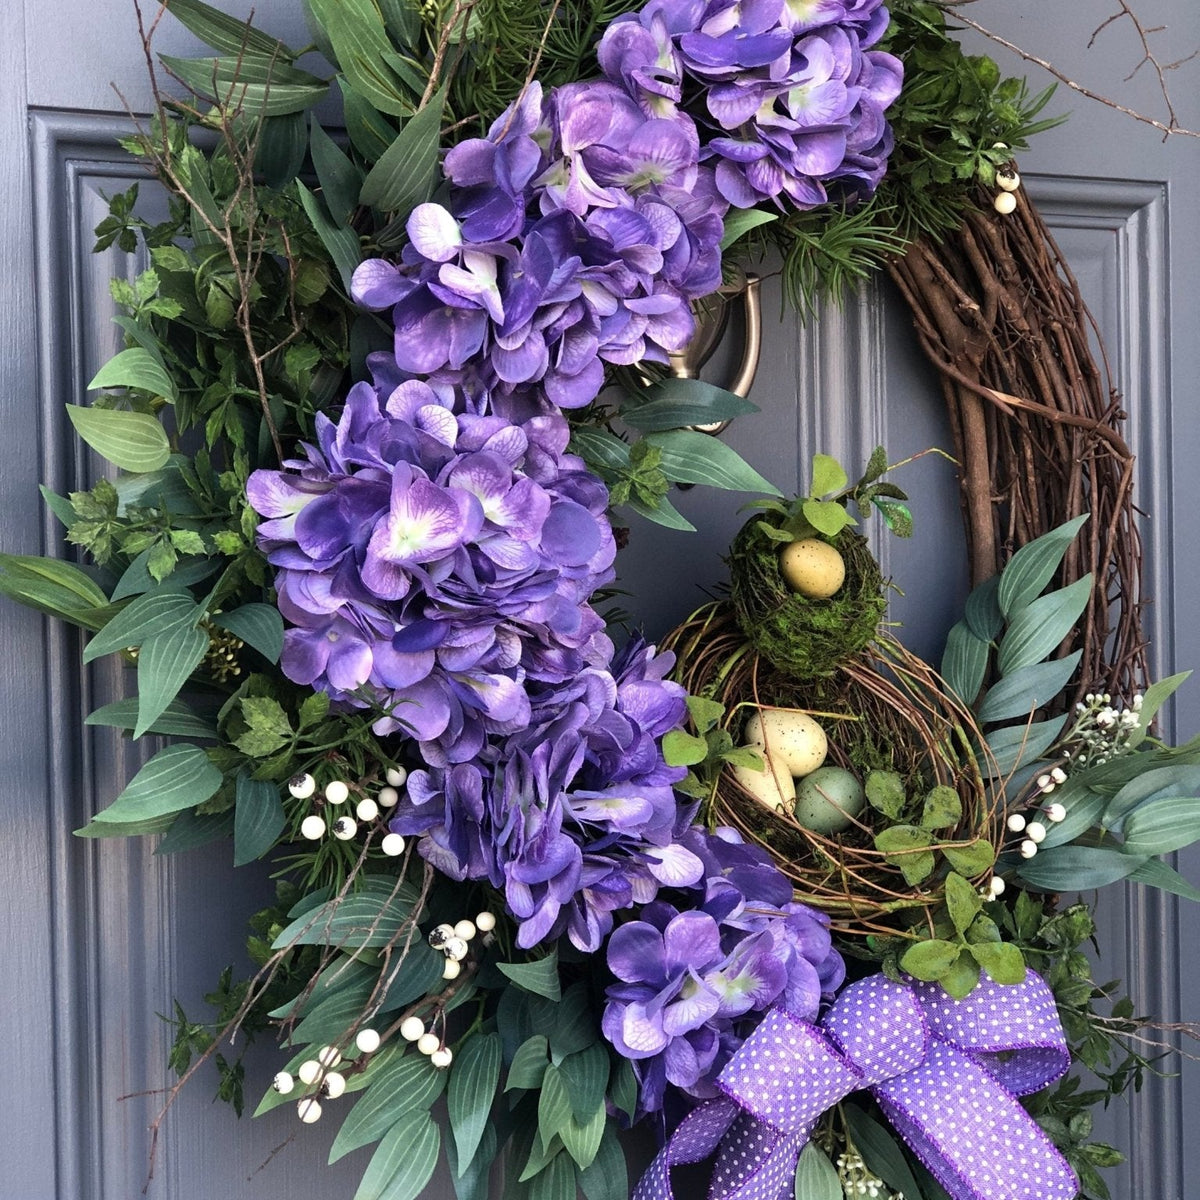 Purple spring front door wreath, purple hydrangeas, a bird nest with eggs